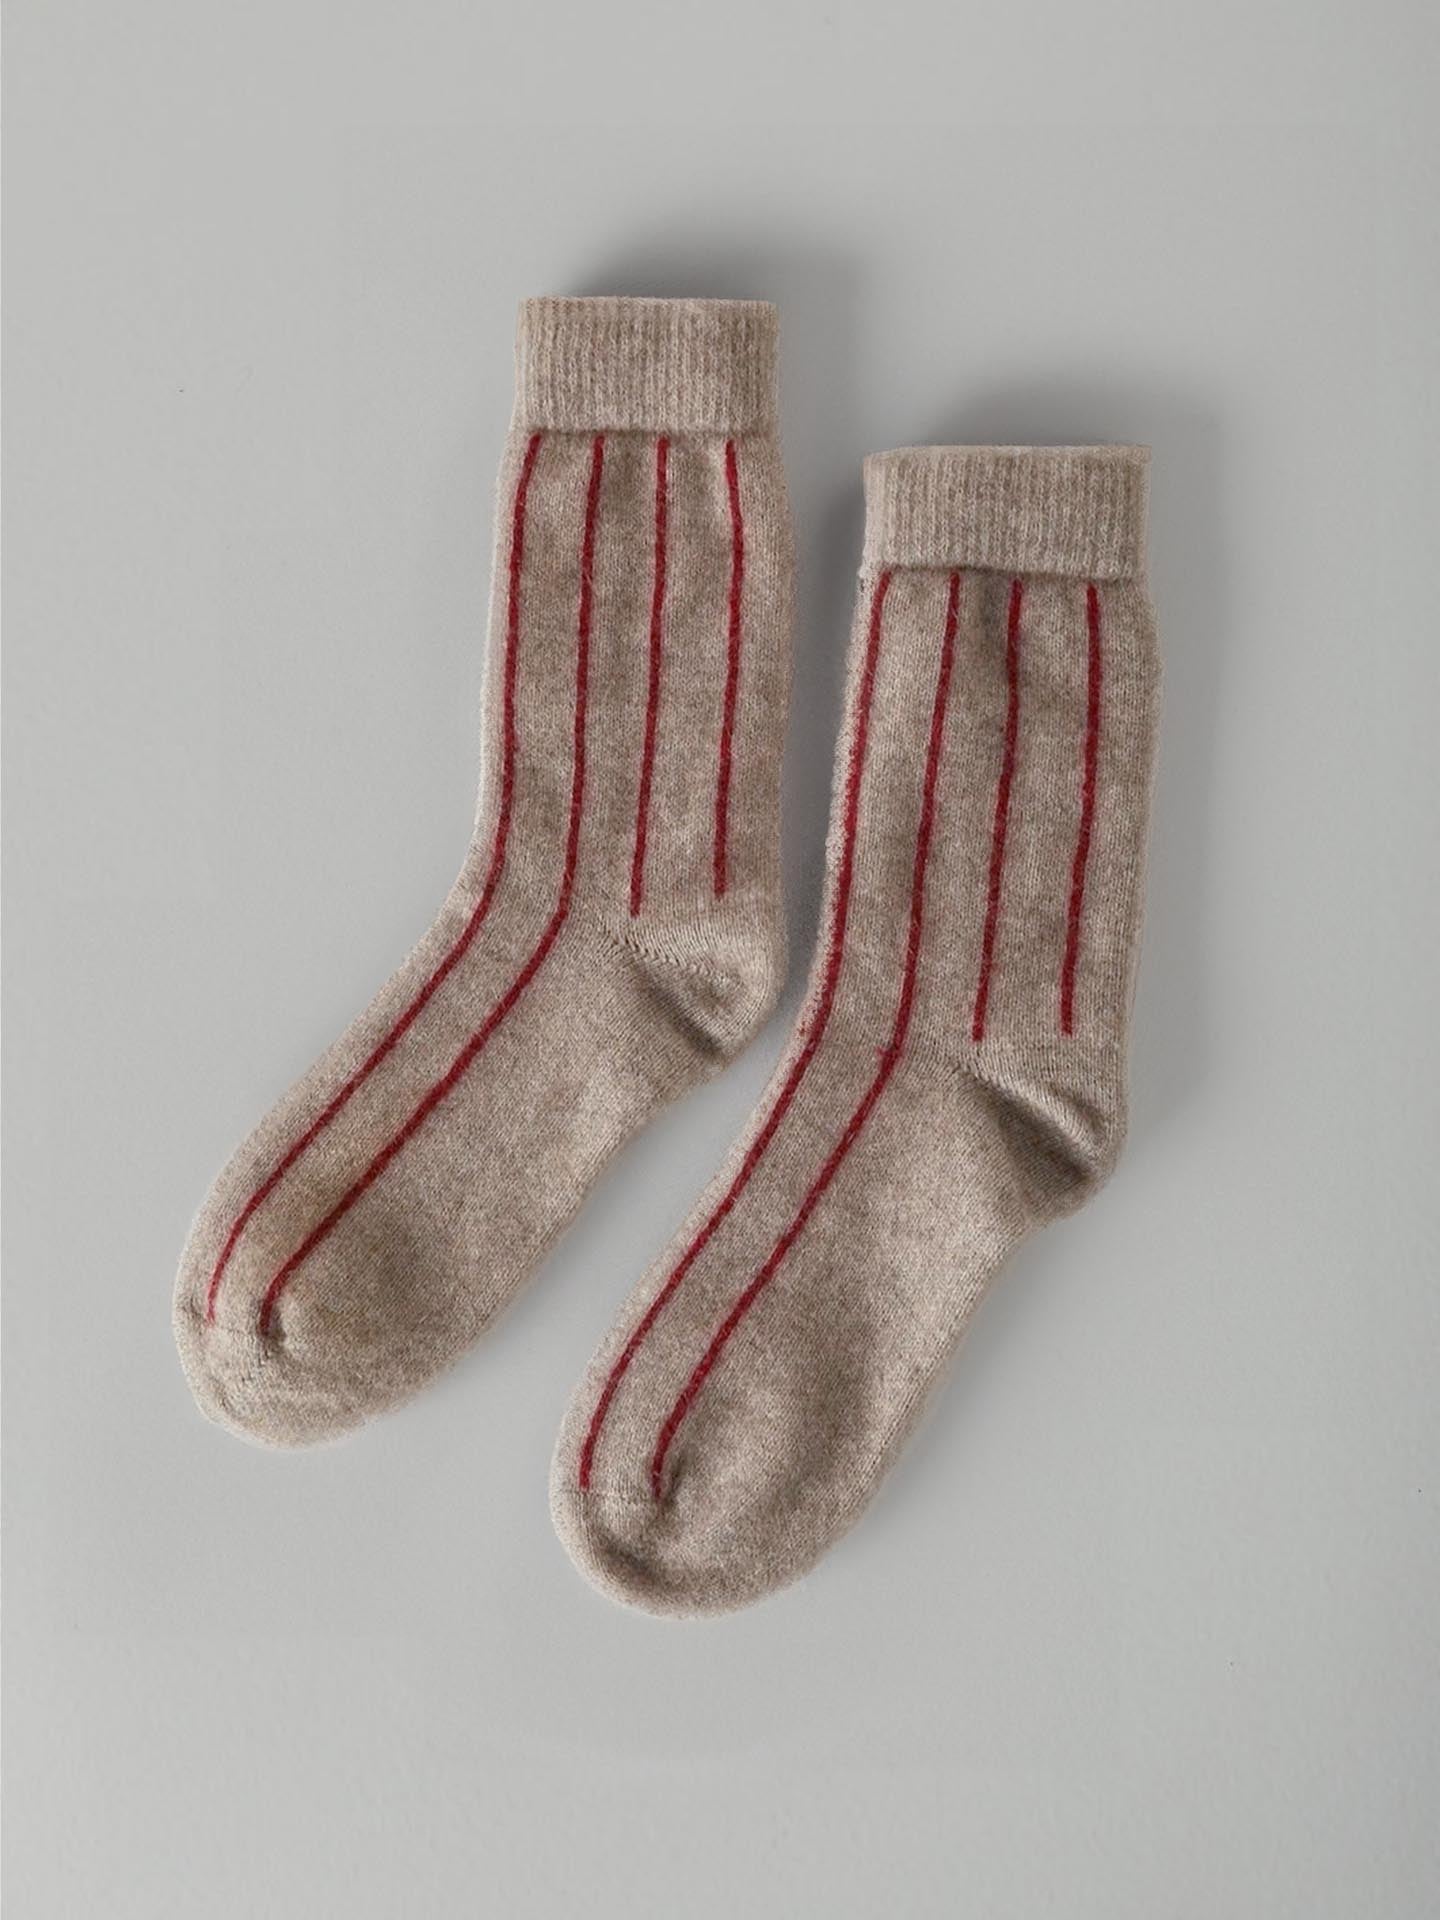 A pair of Francie Possum Merino Socks – Natural & Poppy Stripe displayed on a light gray background.